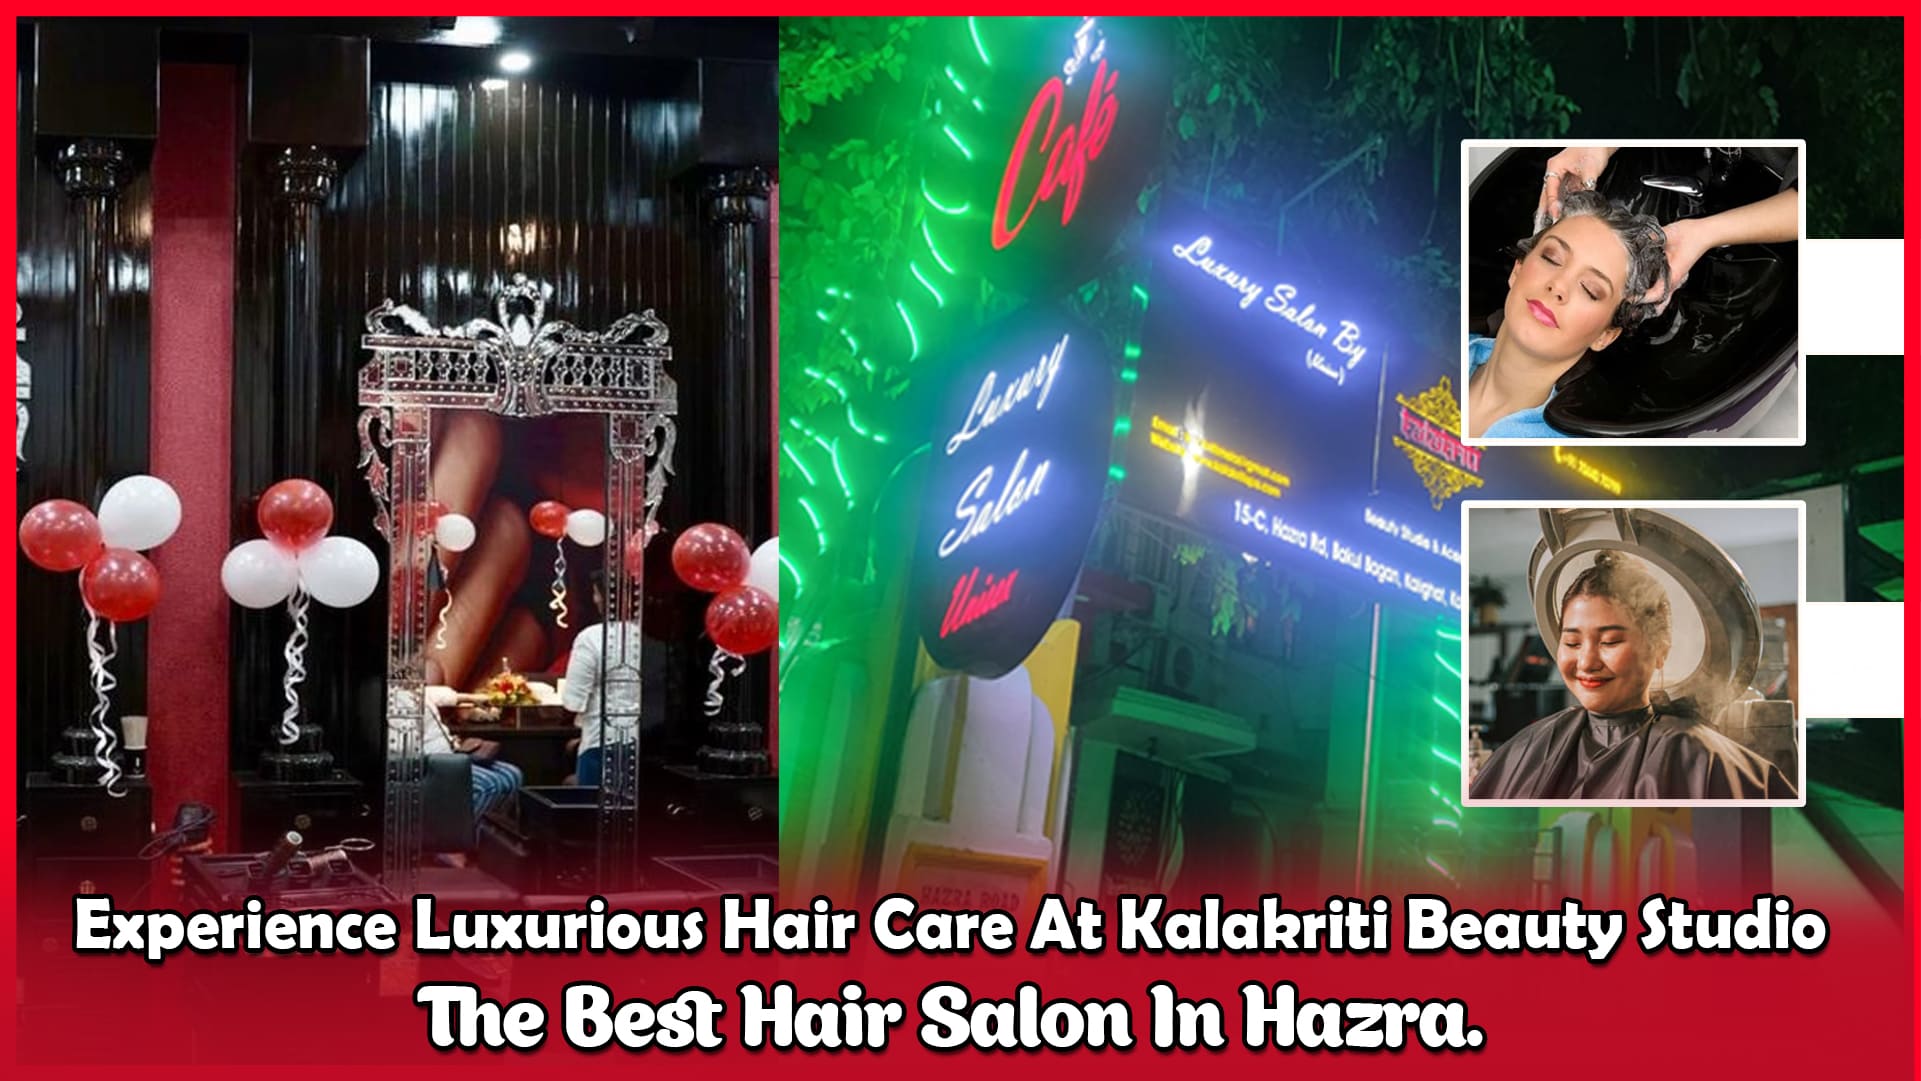 Experience luxurious hair care at Kalakriti Beauty Studio